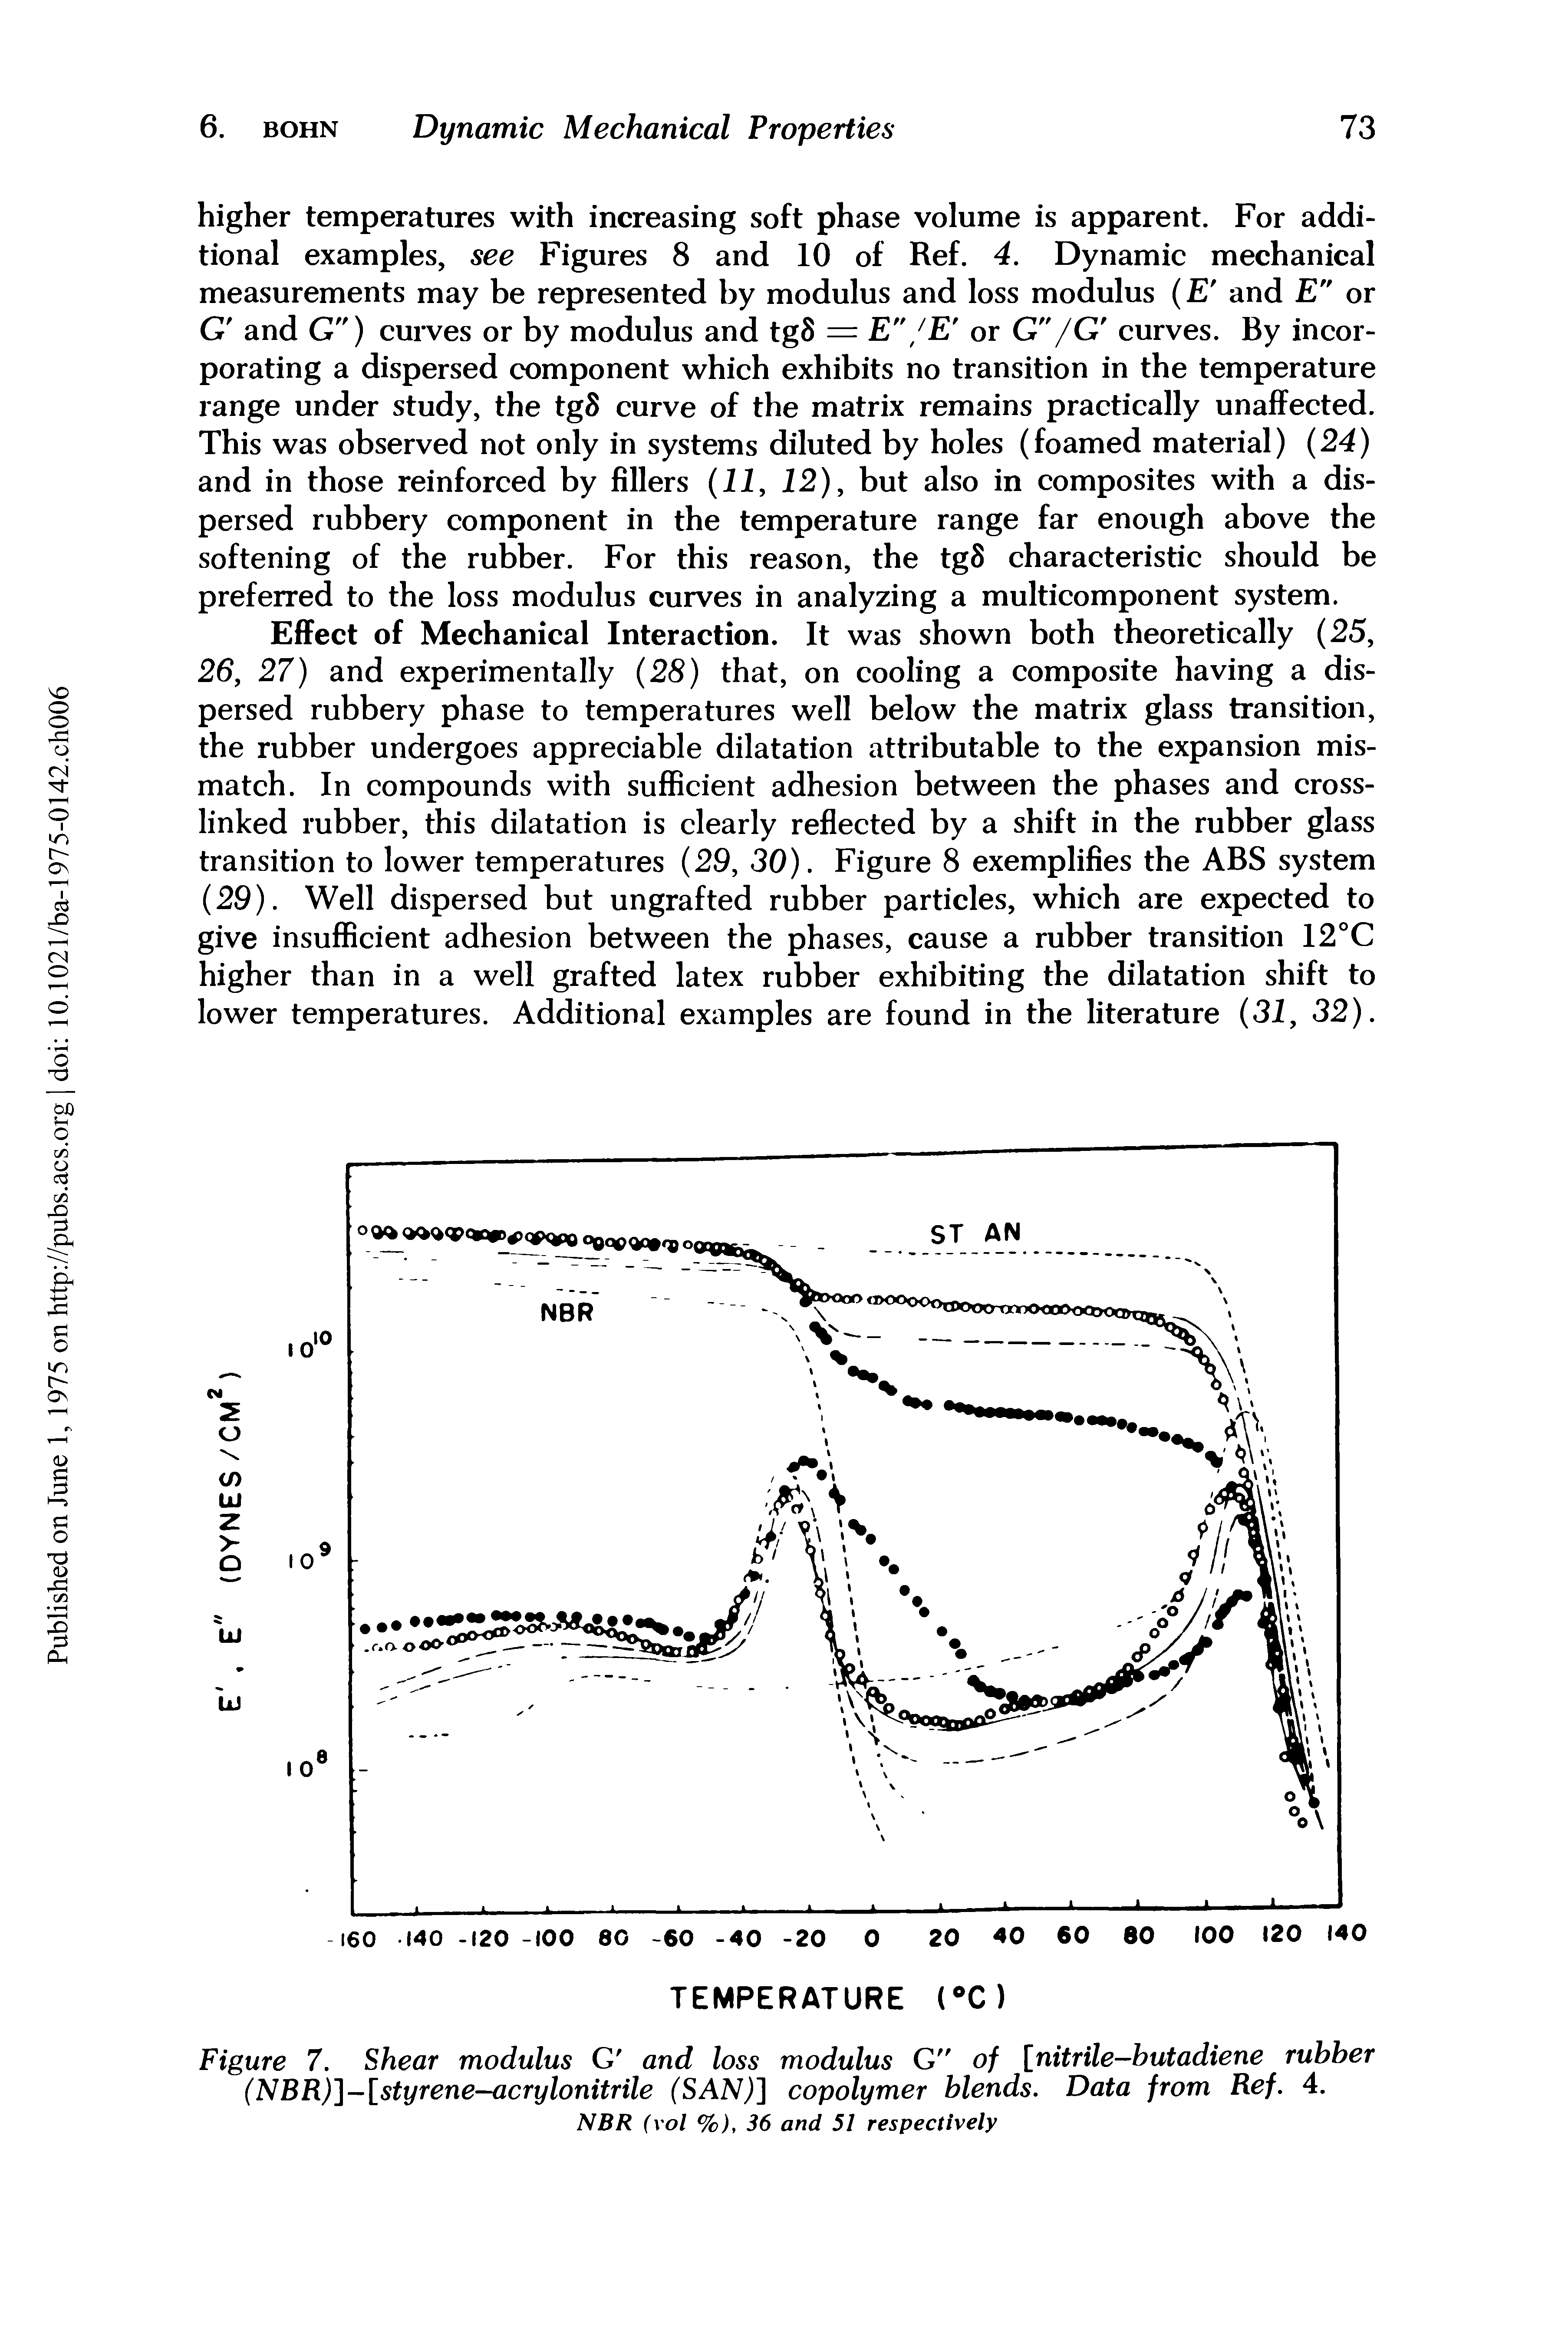 Figure 7. Shear modulus G and loss modulus G" of [nitrile-butadiene rubber (NBR)]-[styrene-acrylonitrile (SAN)] copolymer blends. Data from Ref. 4. NBR (vol %), 36 and 51 respectively...